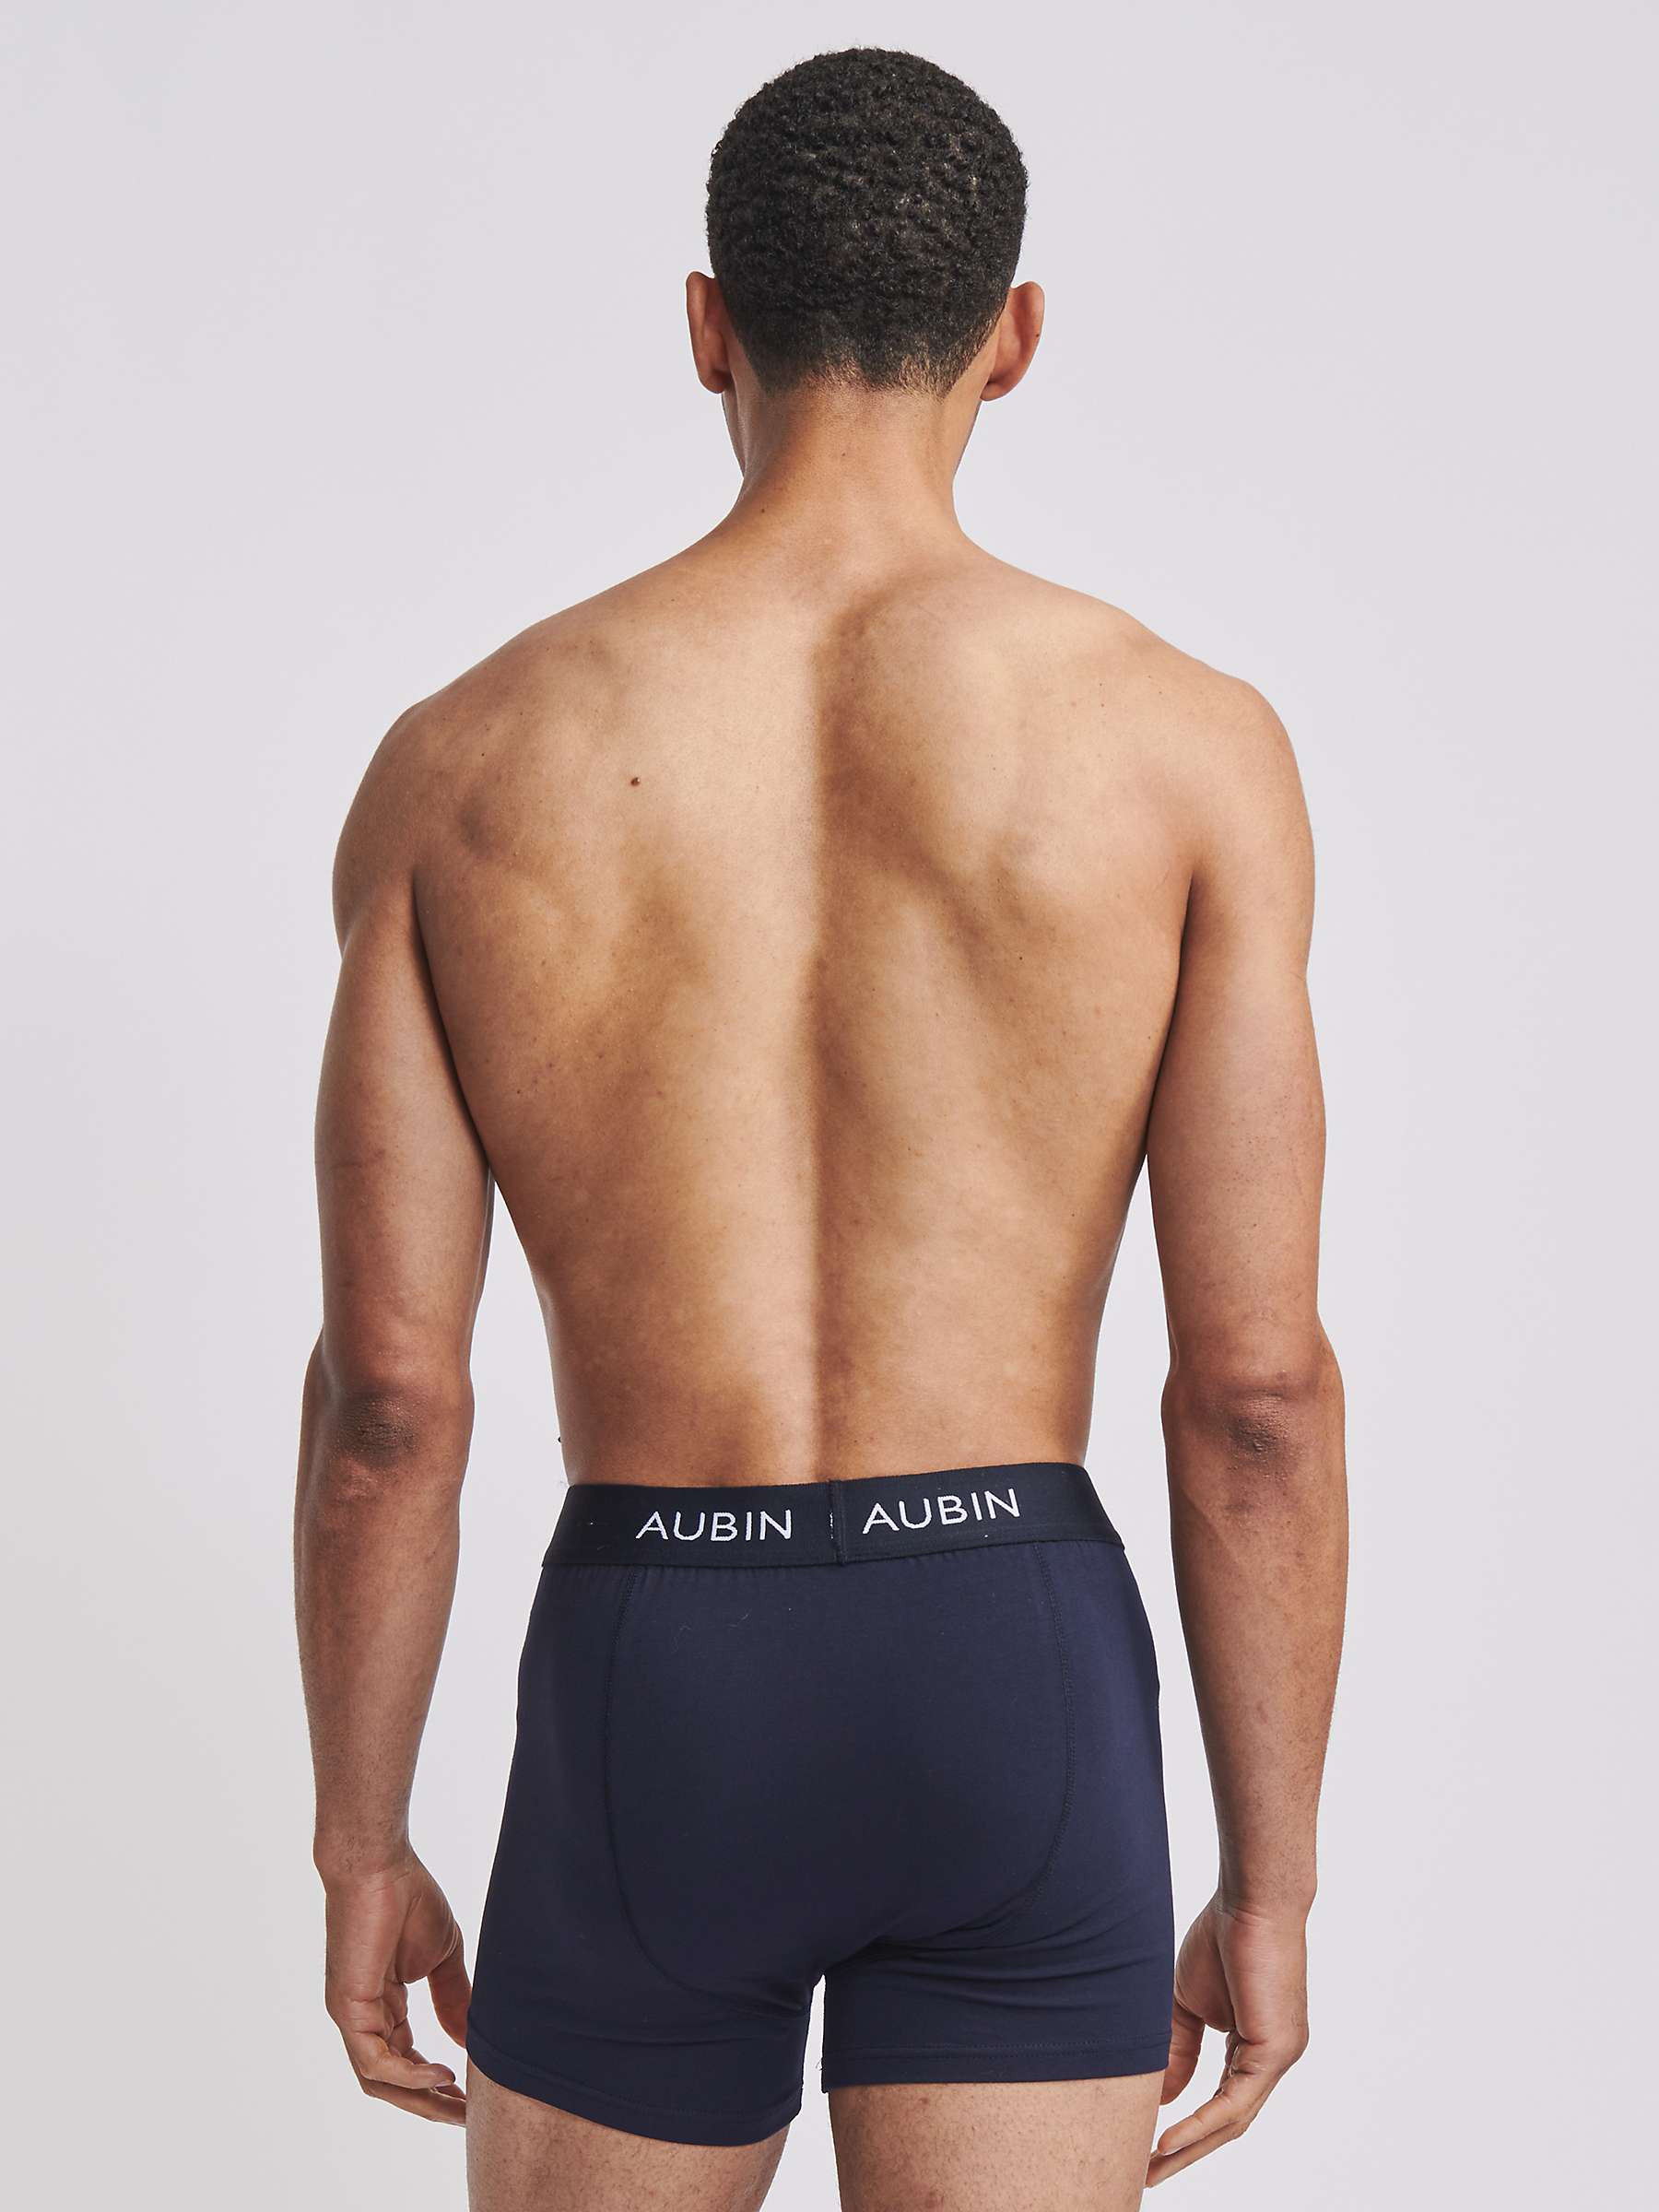 Buy Aubin Hellston Boxers, Pack of 3 Online at johnlewis.com